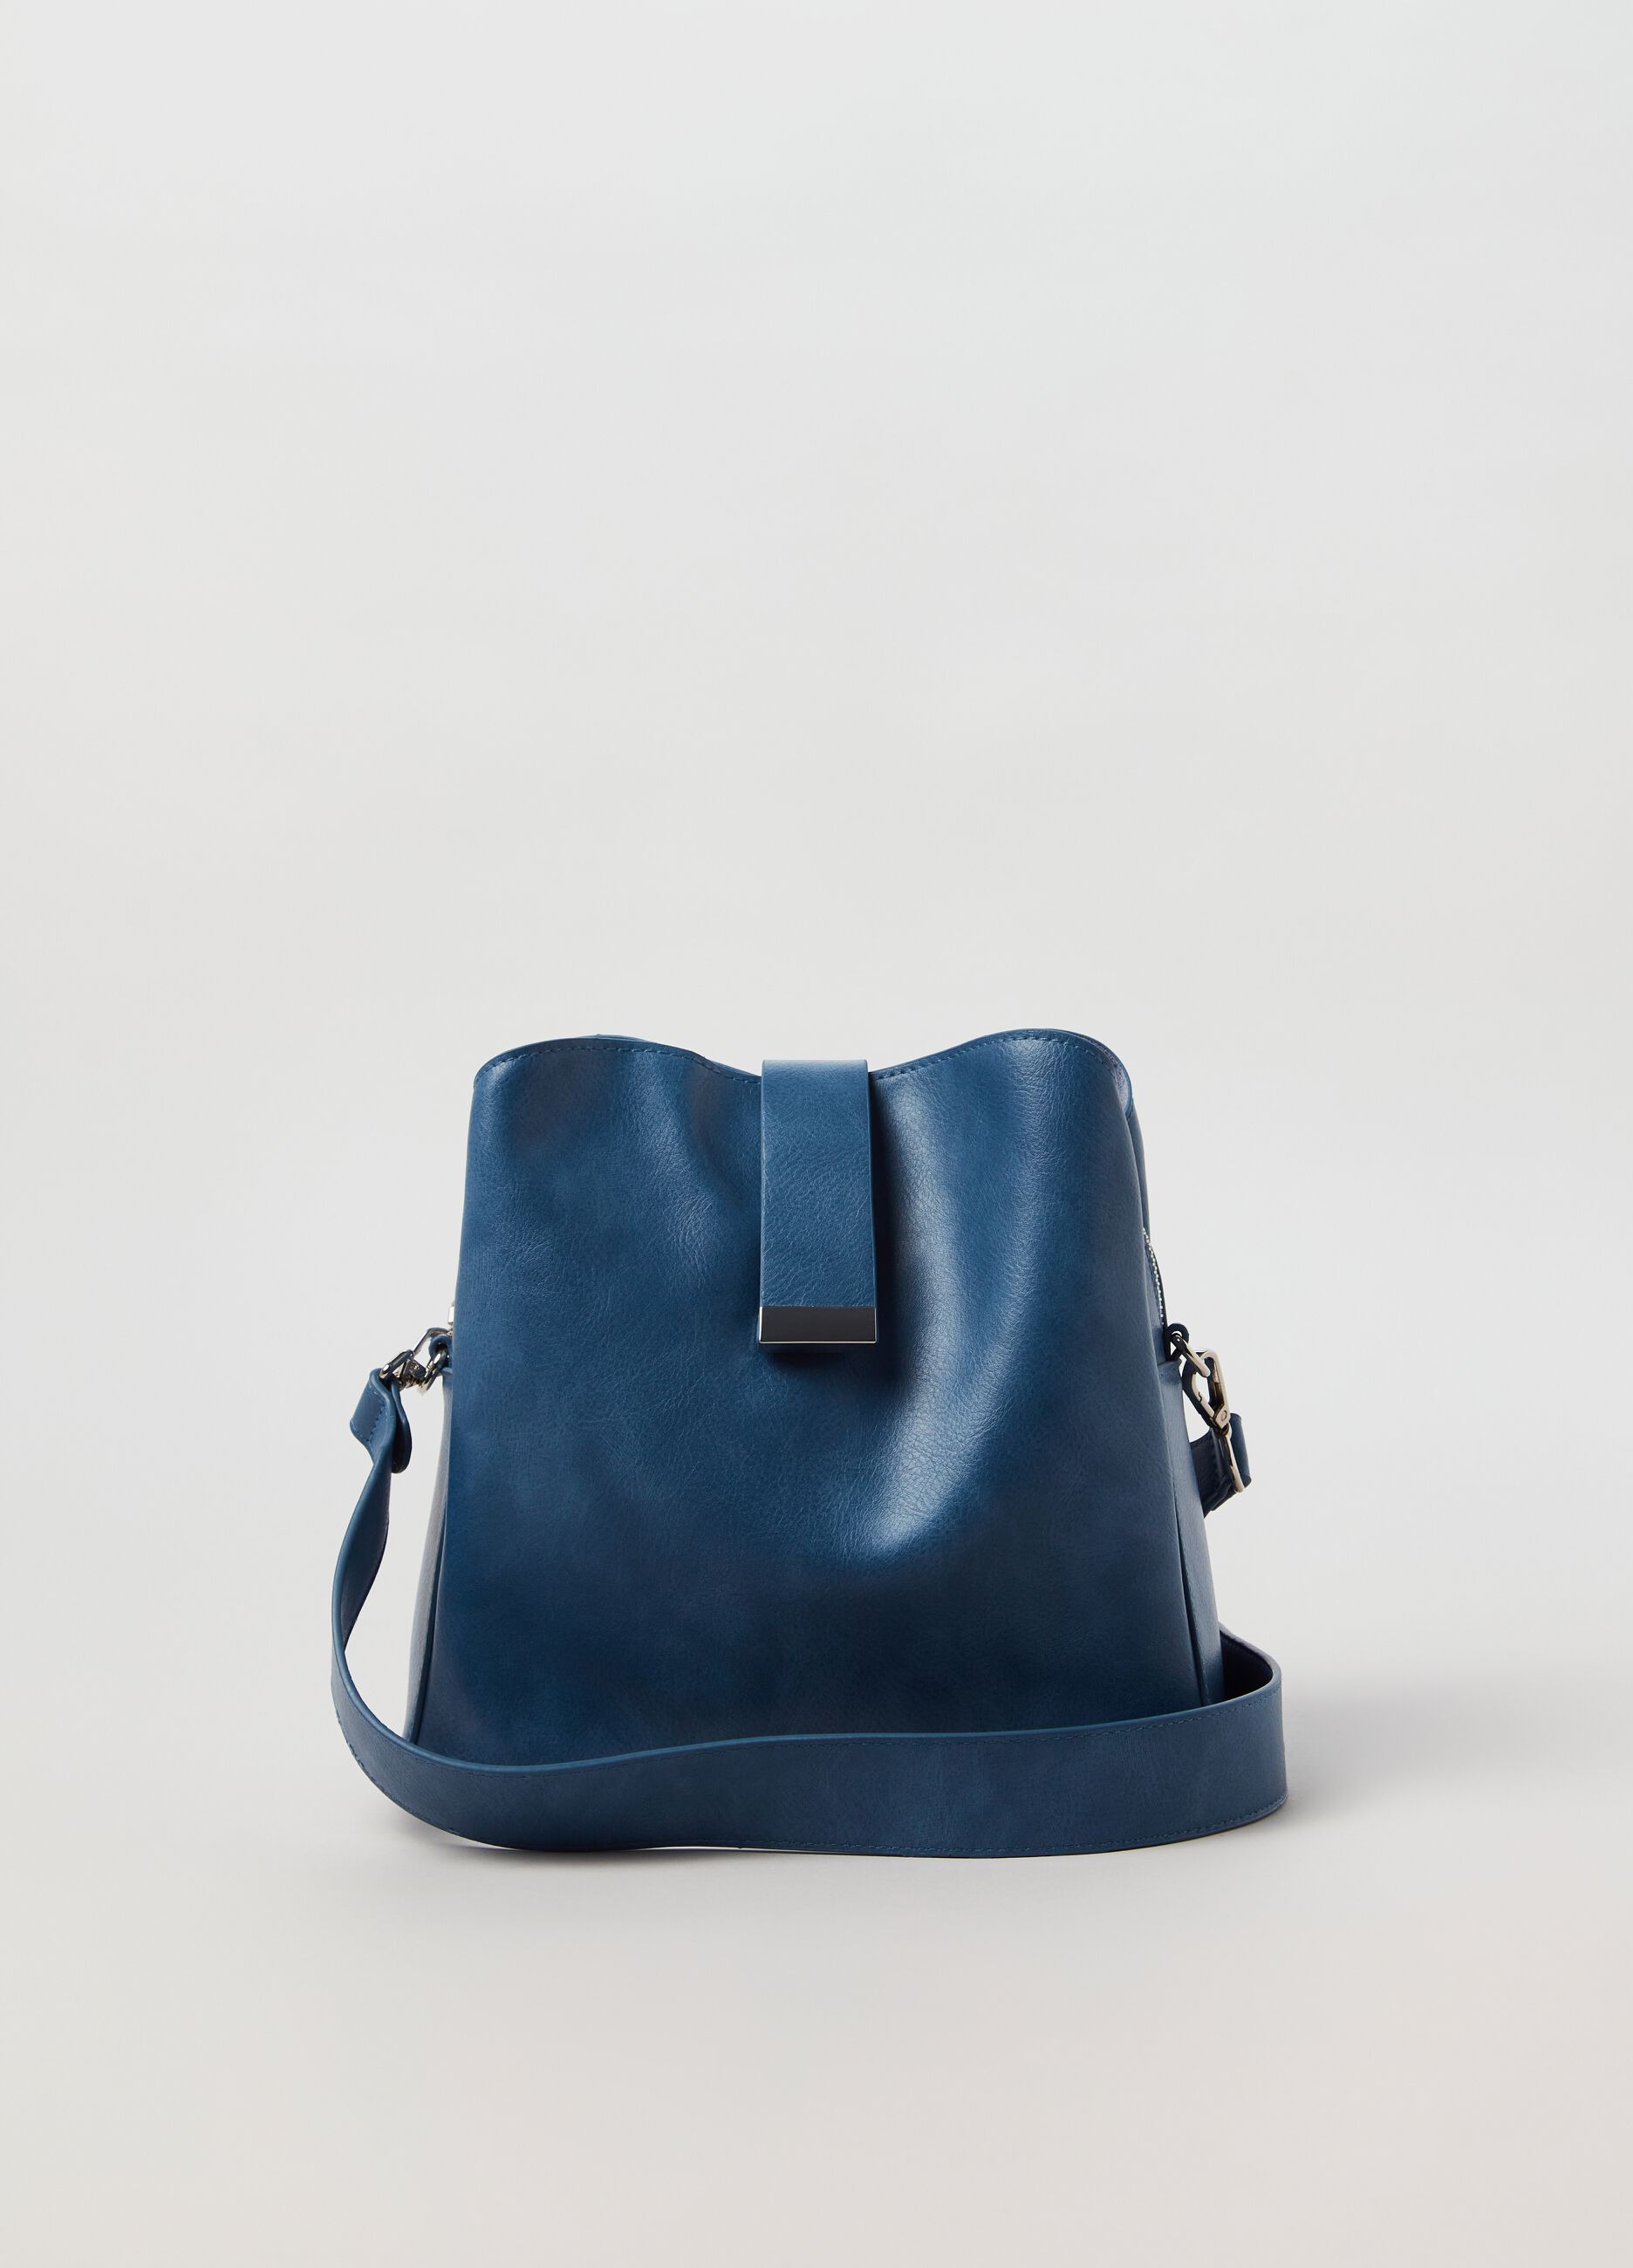 Chicca Borse 80058, Women'S Cross-Body Bag, Rosso, 36X36X13 cm - W X H L :  Amazon.in: Shoes & Handbags